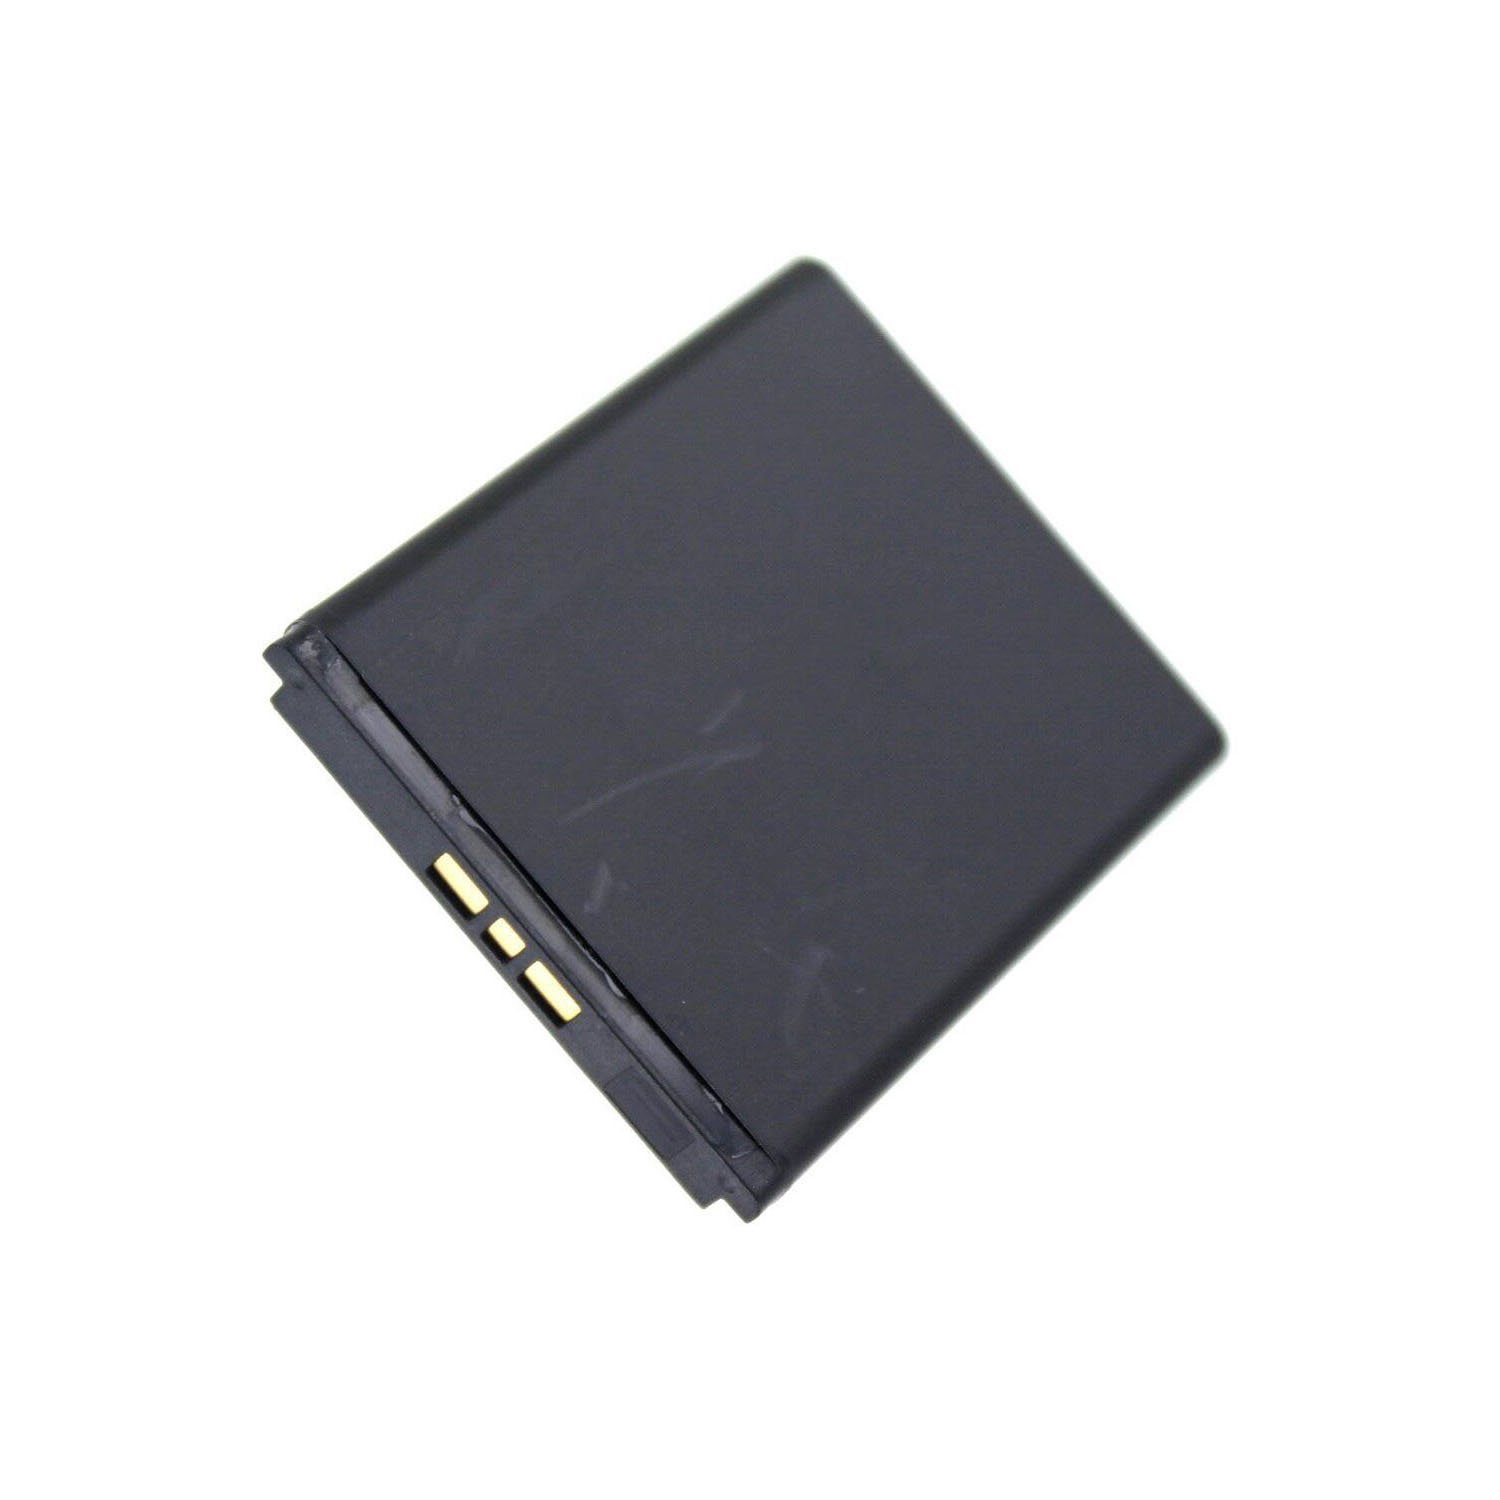 AGI kompatibel mit G502 Akku Sony Ericsson Akku Akku